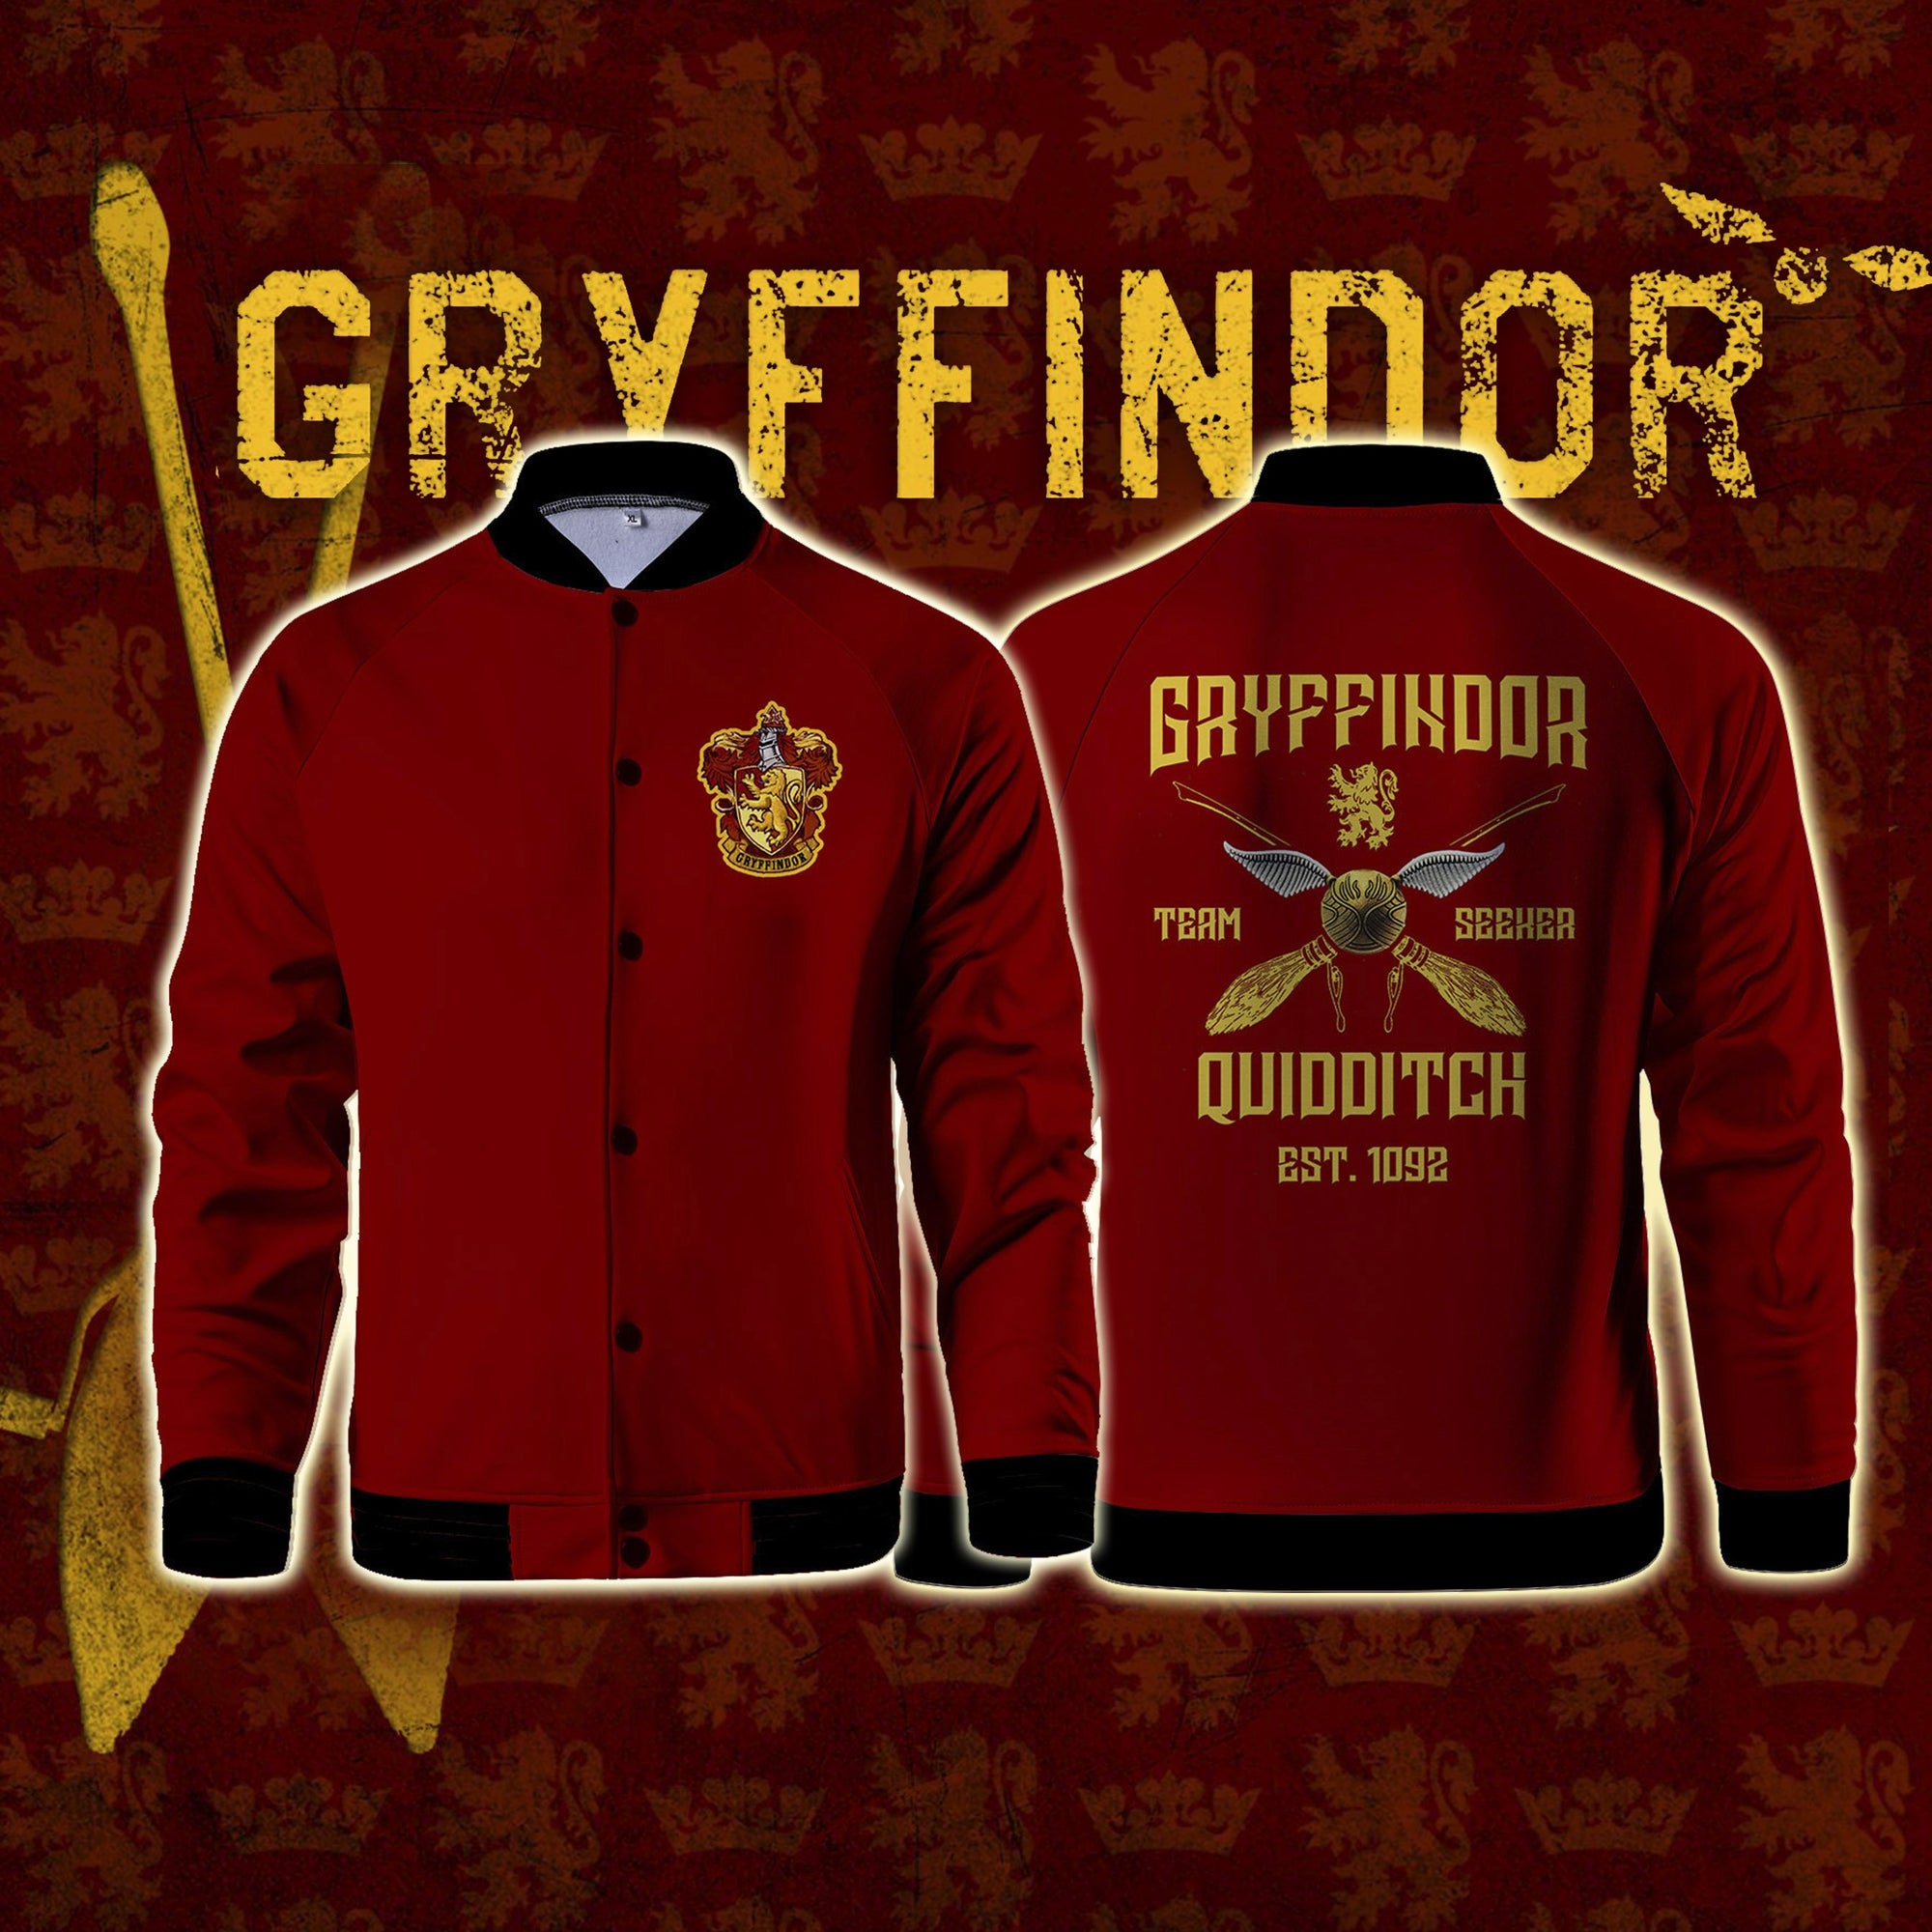 Gryffindor Quidditch Team Harry Potter Baseball Jacket